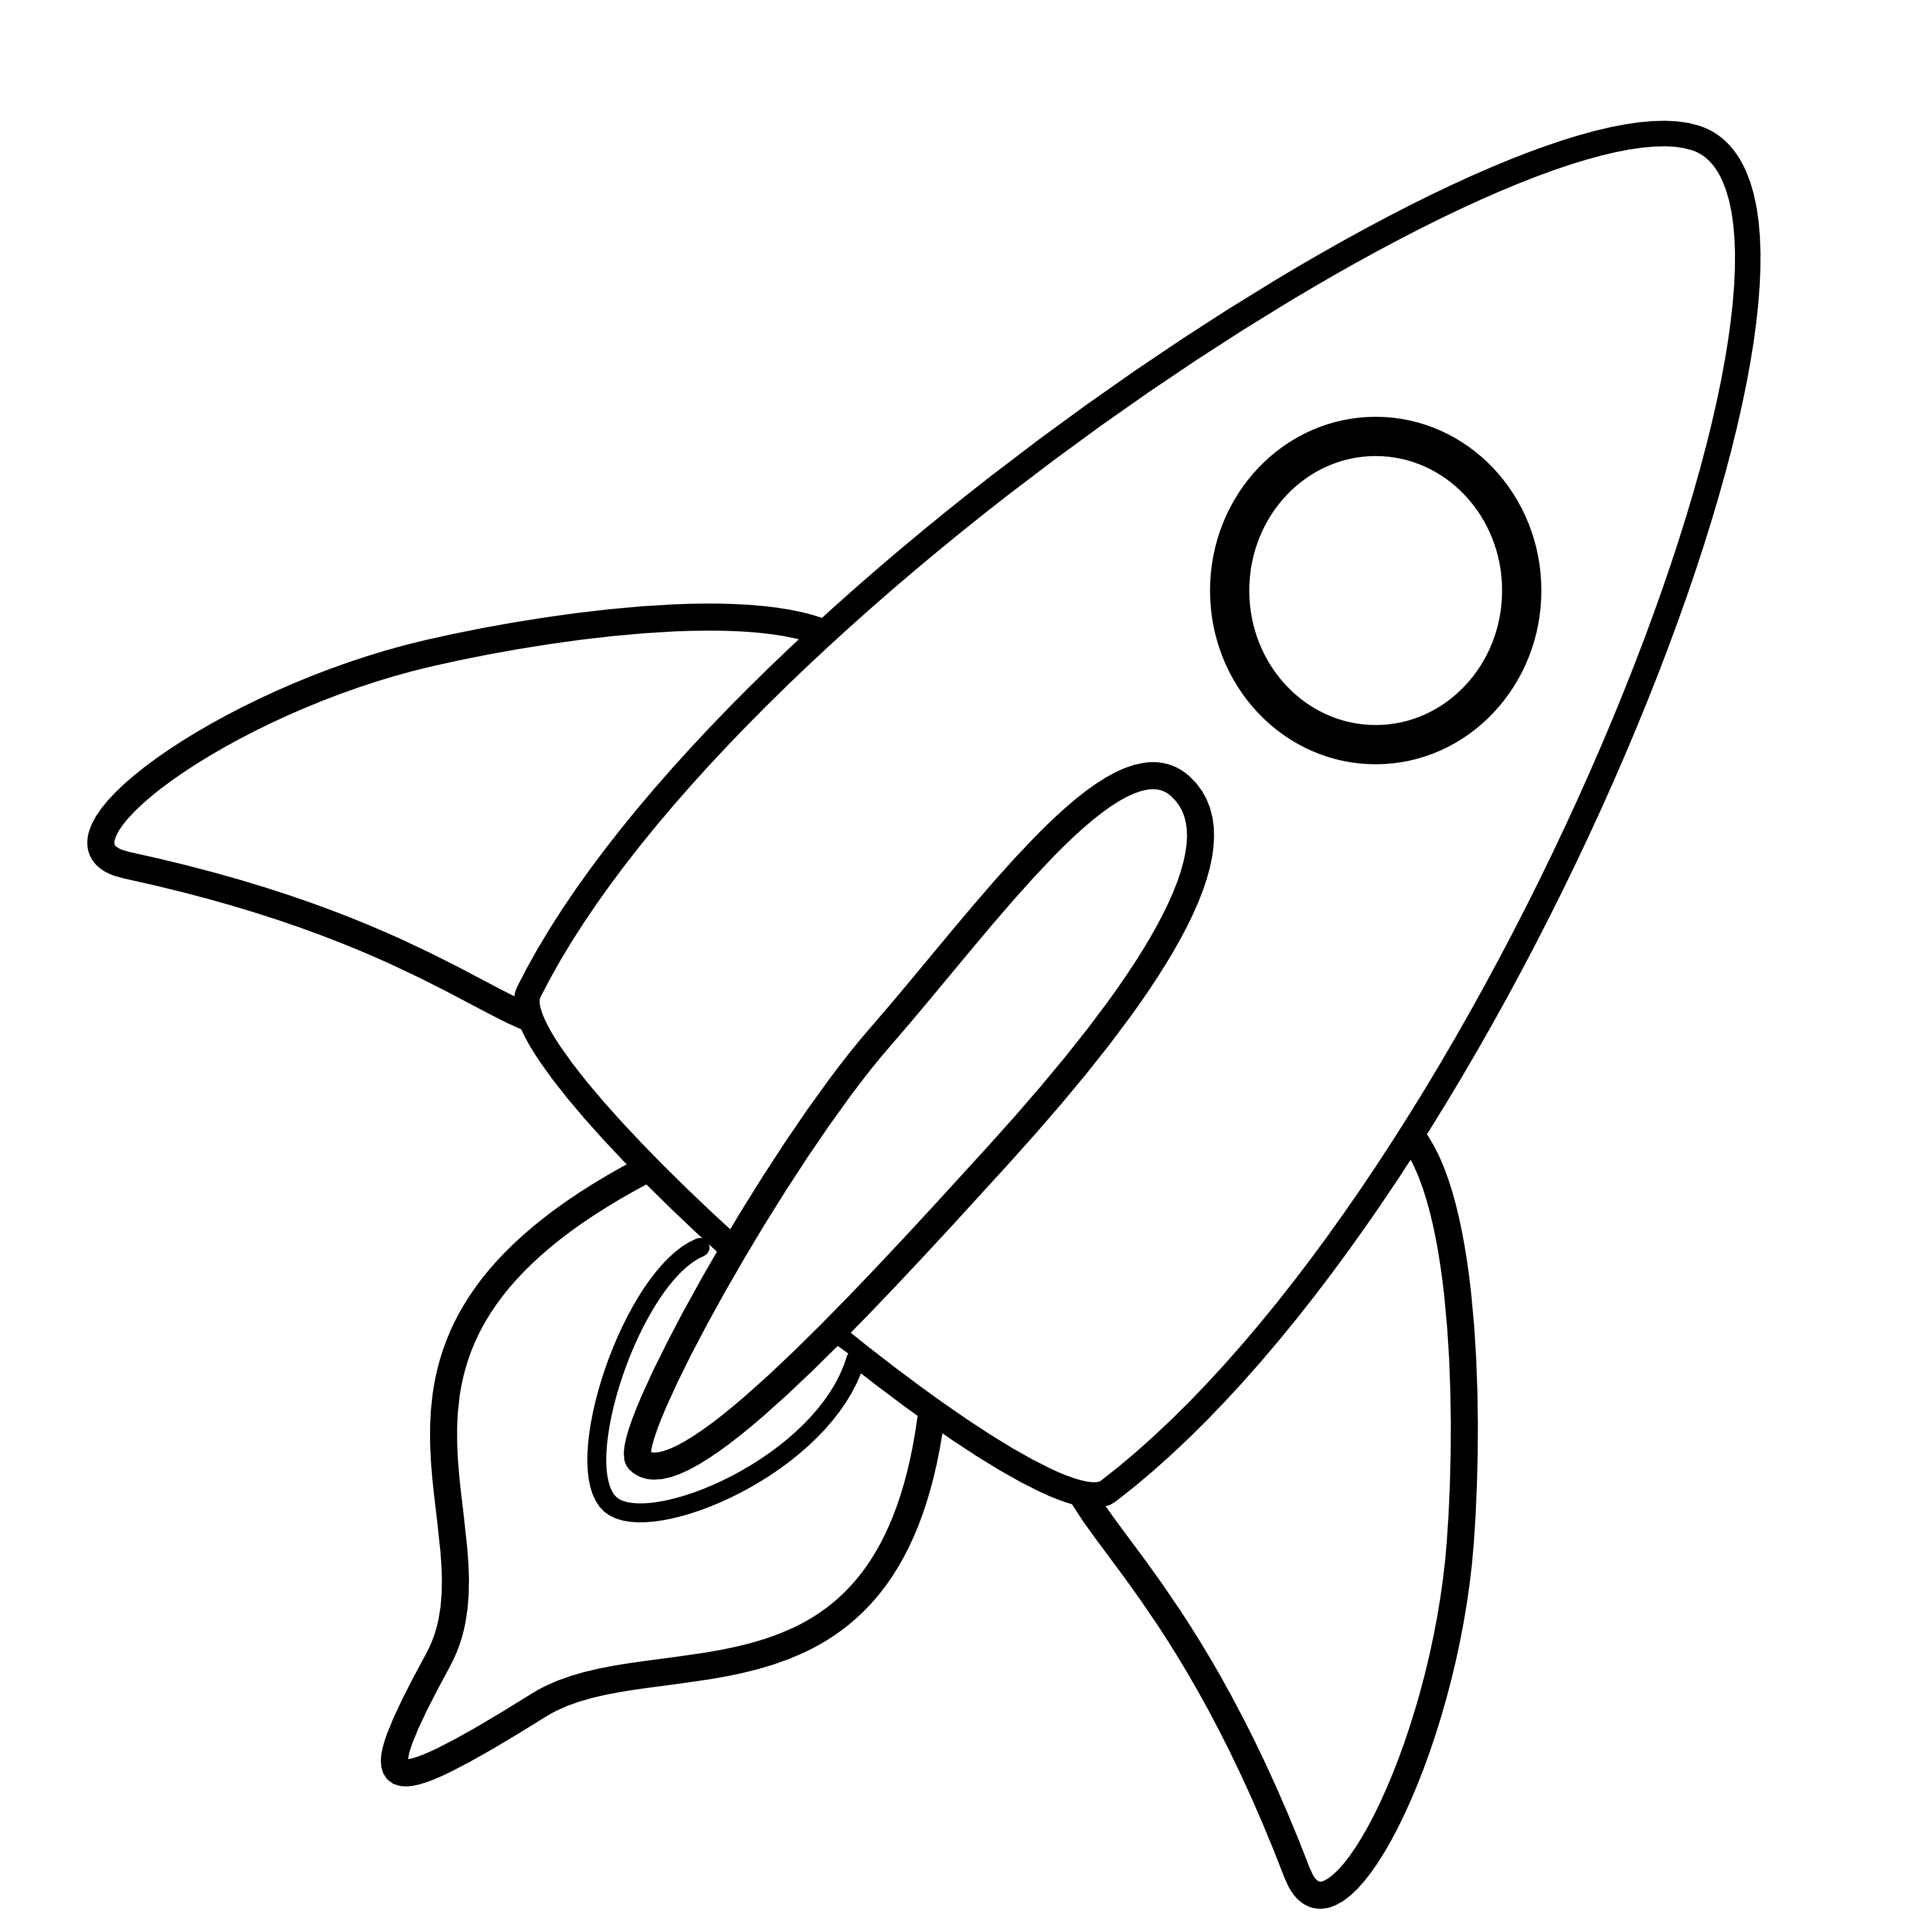 ... Space rocket clip art black and white pics about space - Clipartix ...